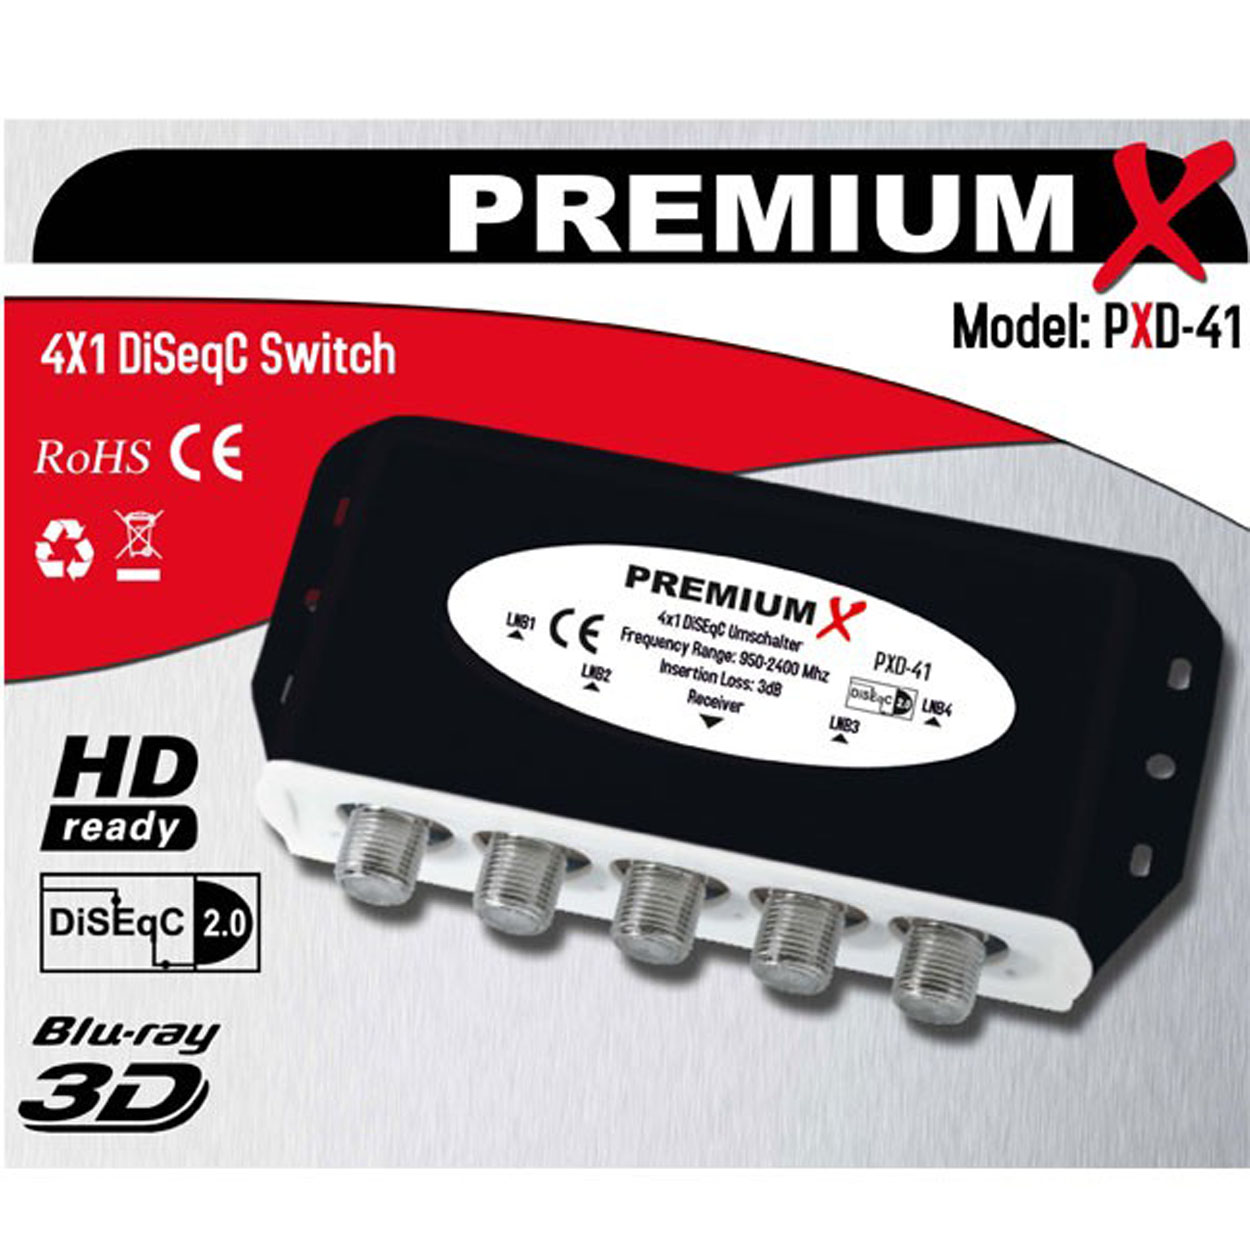 PREMIUMX PXD-41 HDTV 2.0 Full Umschalter DiSEqC Sat-Multischalter 4K HD 4/1 Schalter